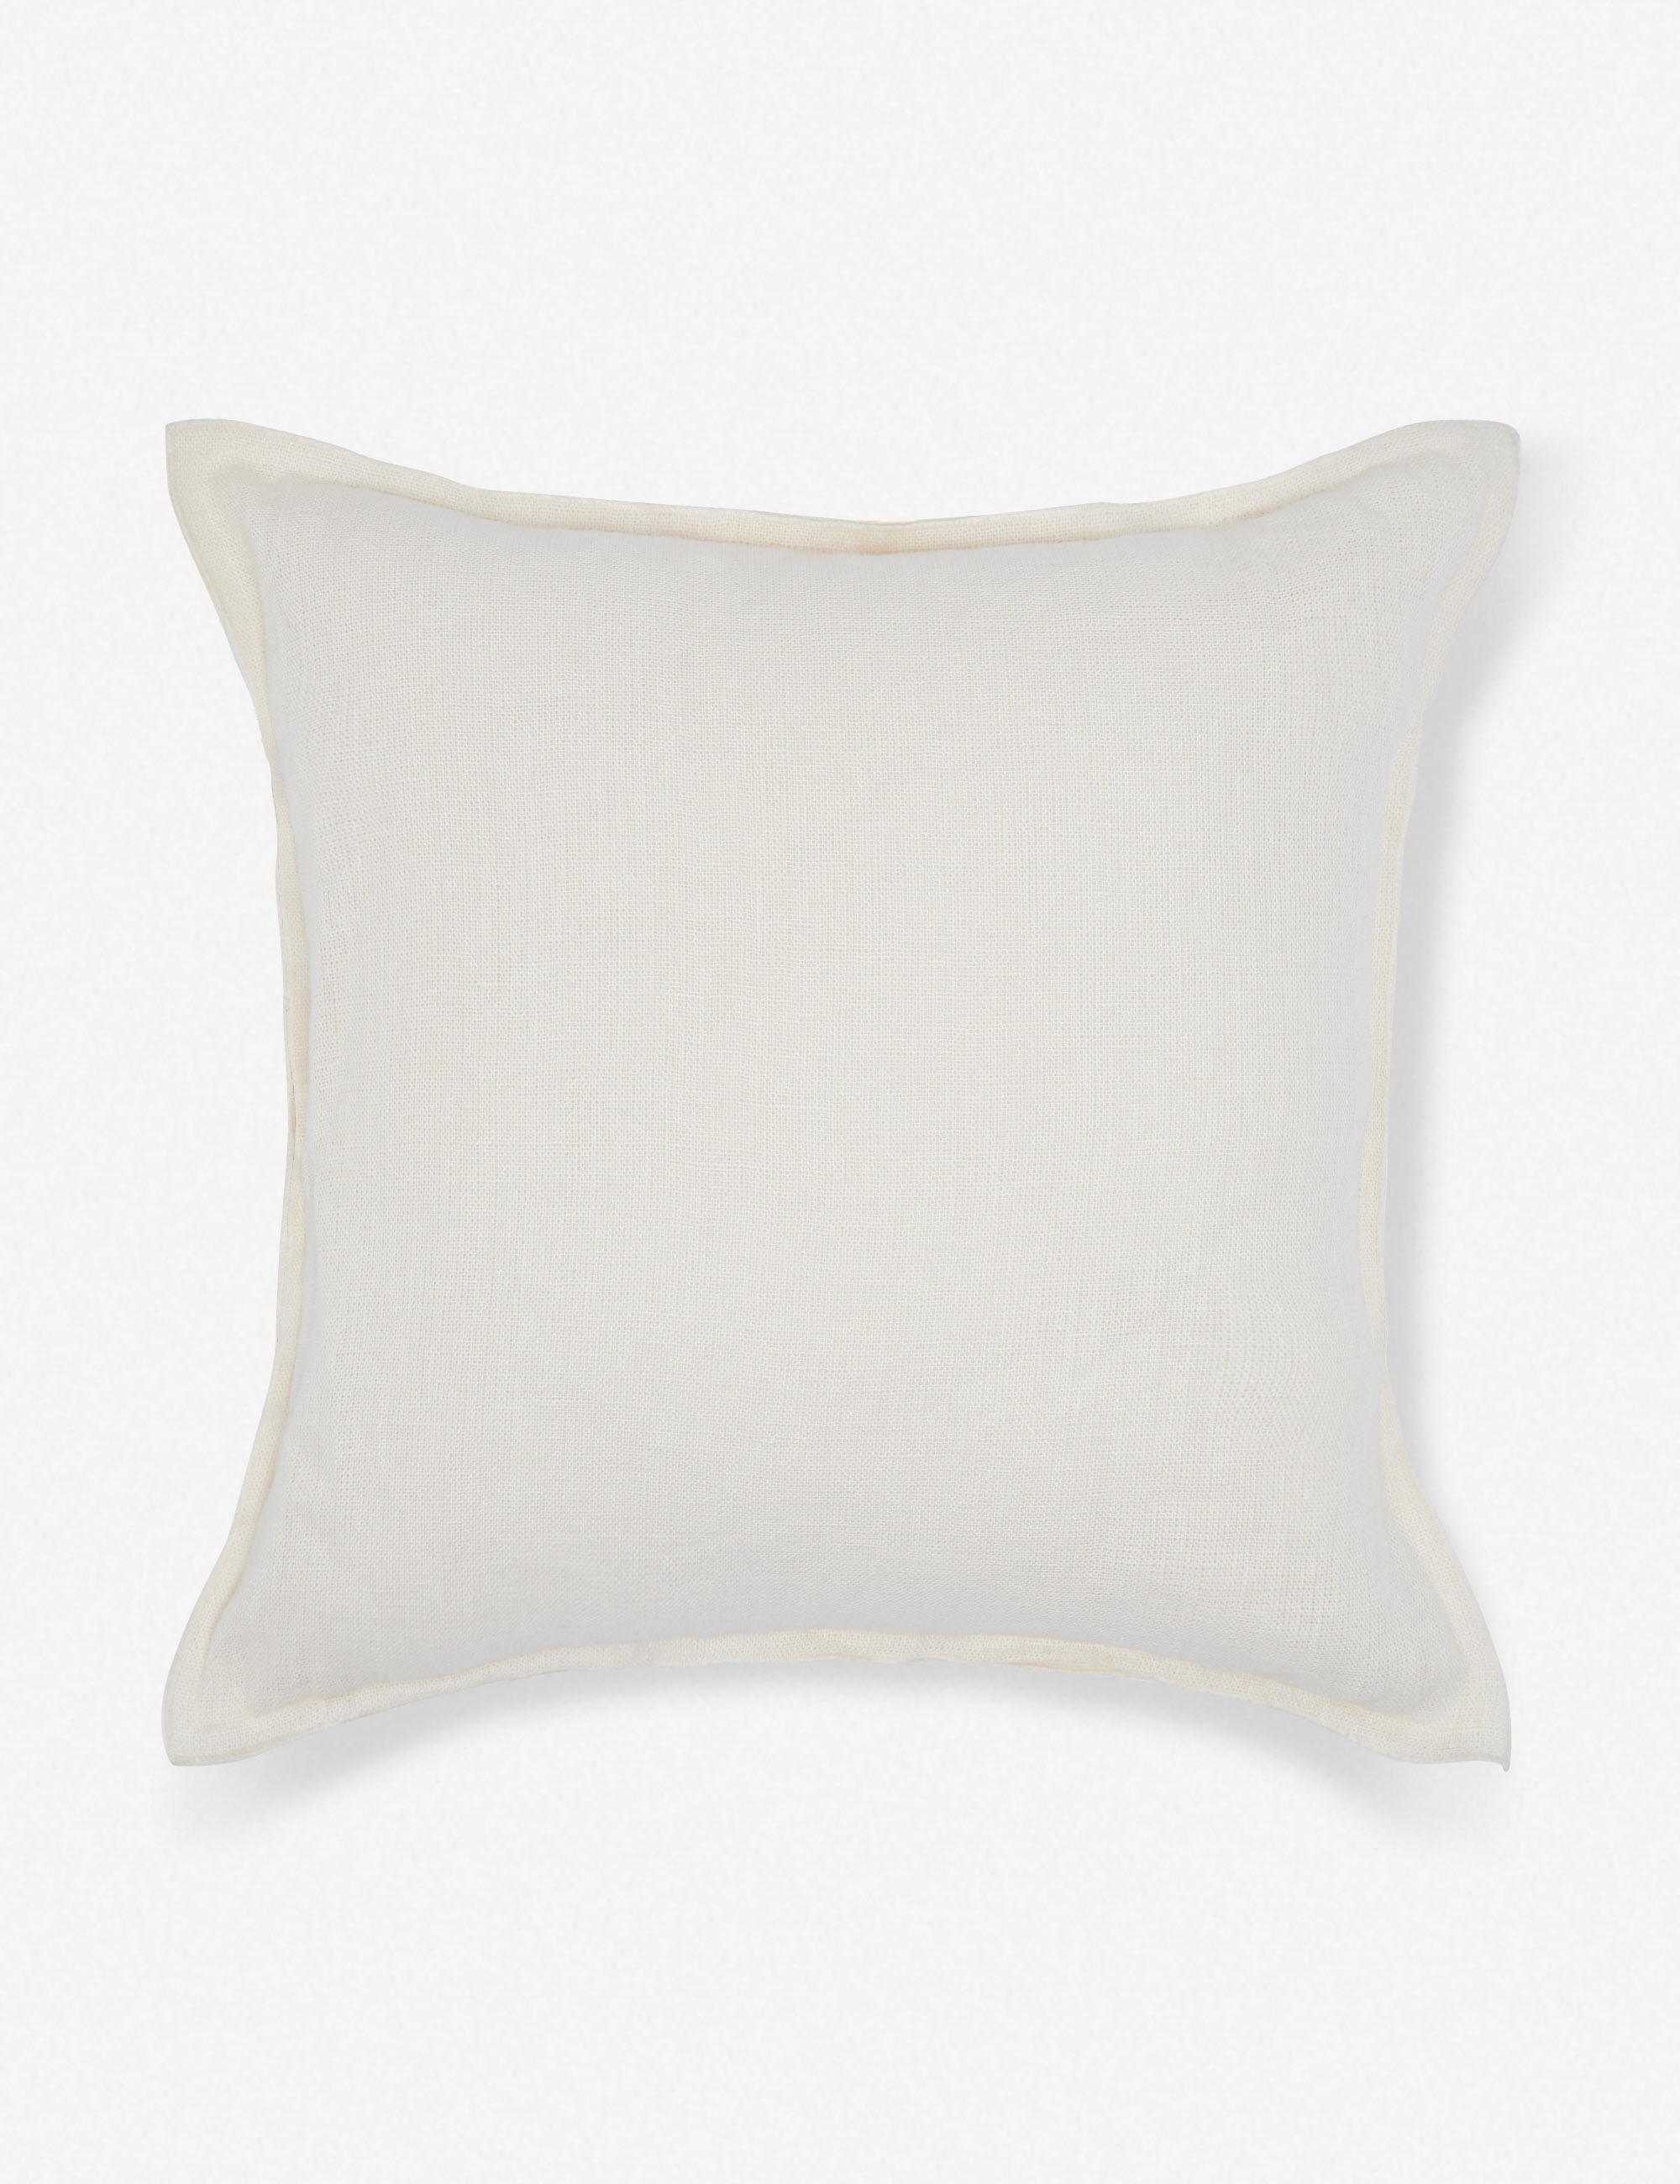 Arlo Linen Pillow, Ivory - Image 1